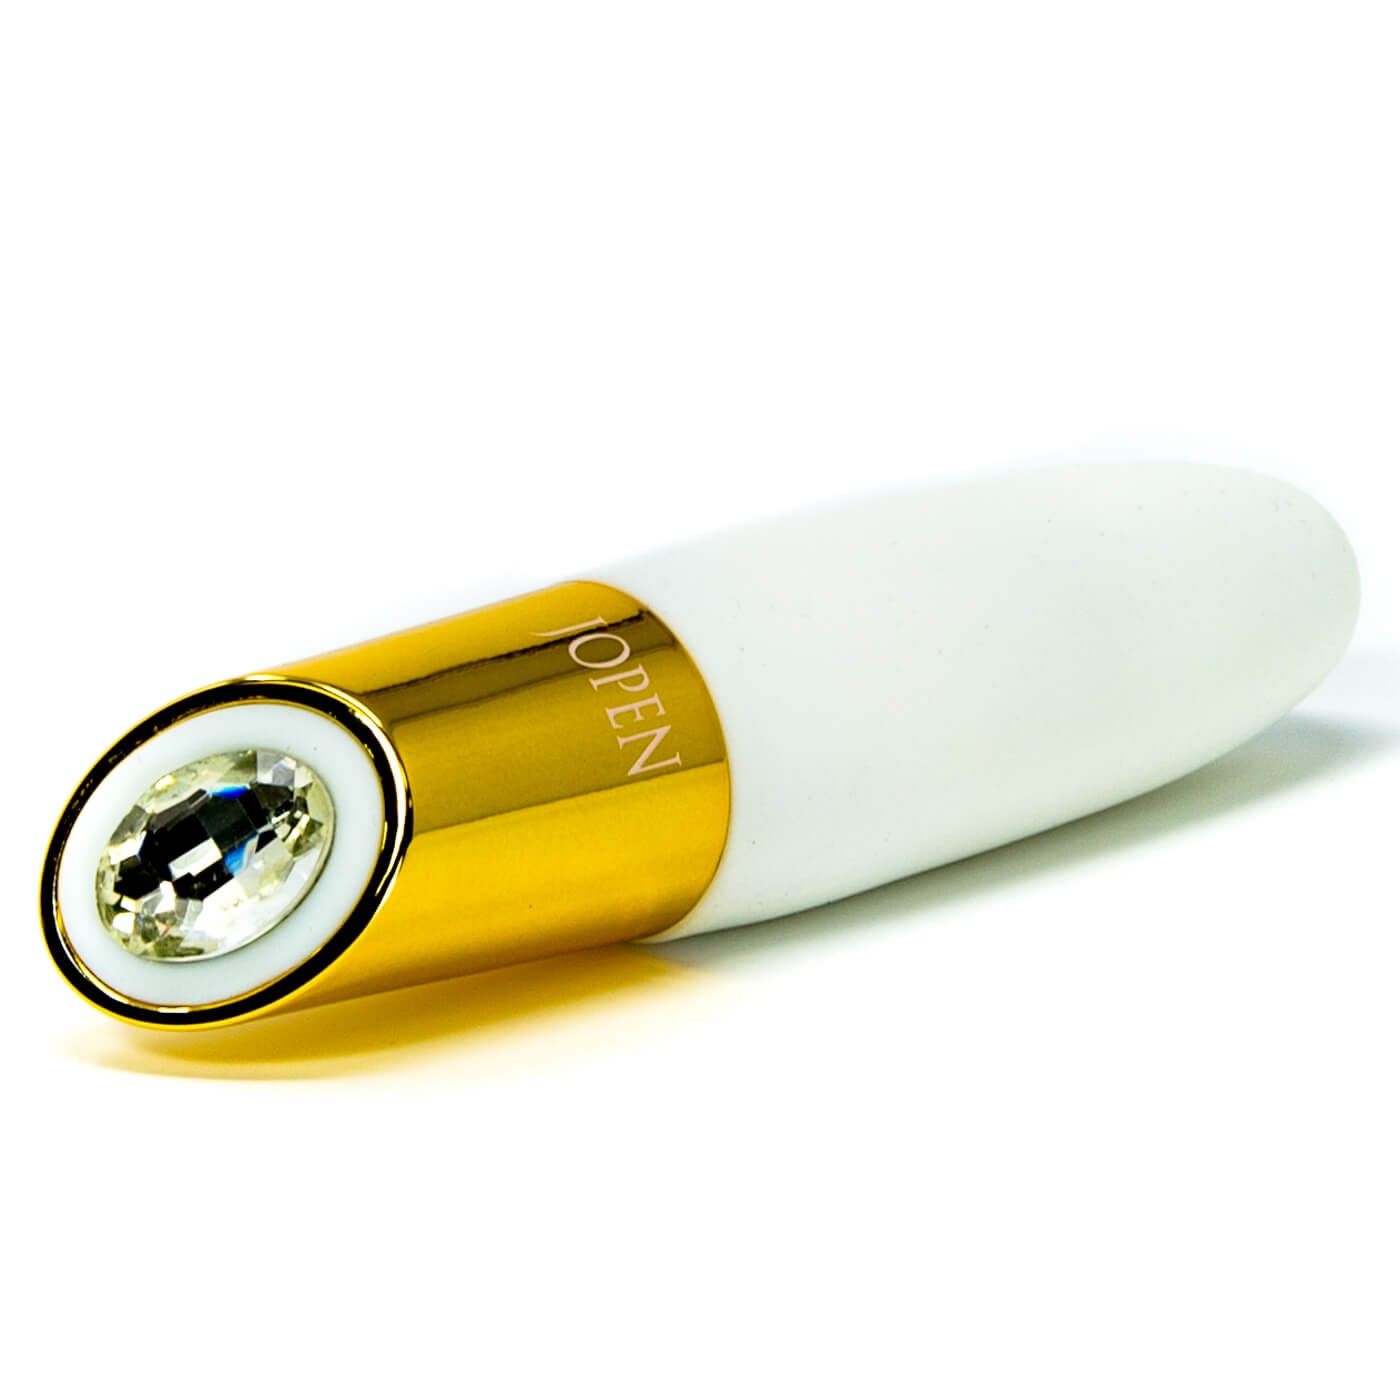 Jopen Callie Mini Wand 7 Function Waterproof USB Rechargeable Bullet Vibrator